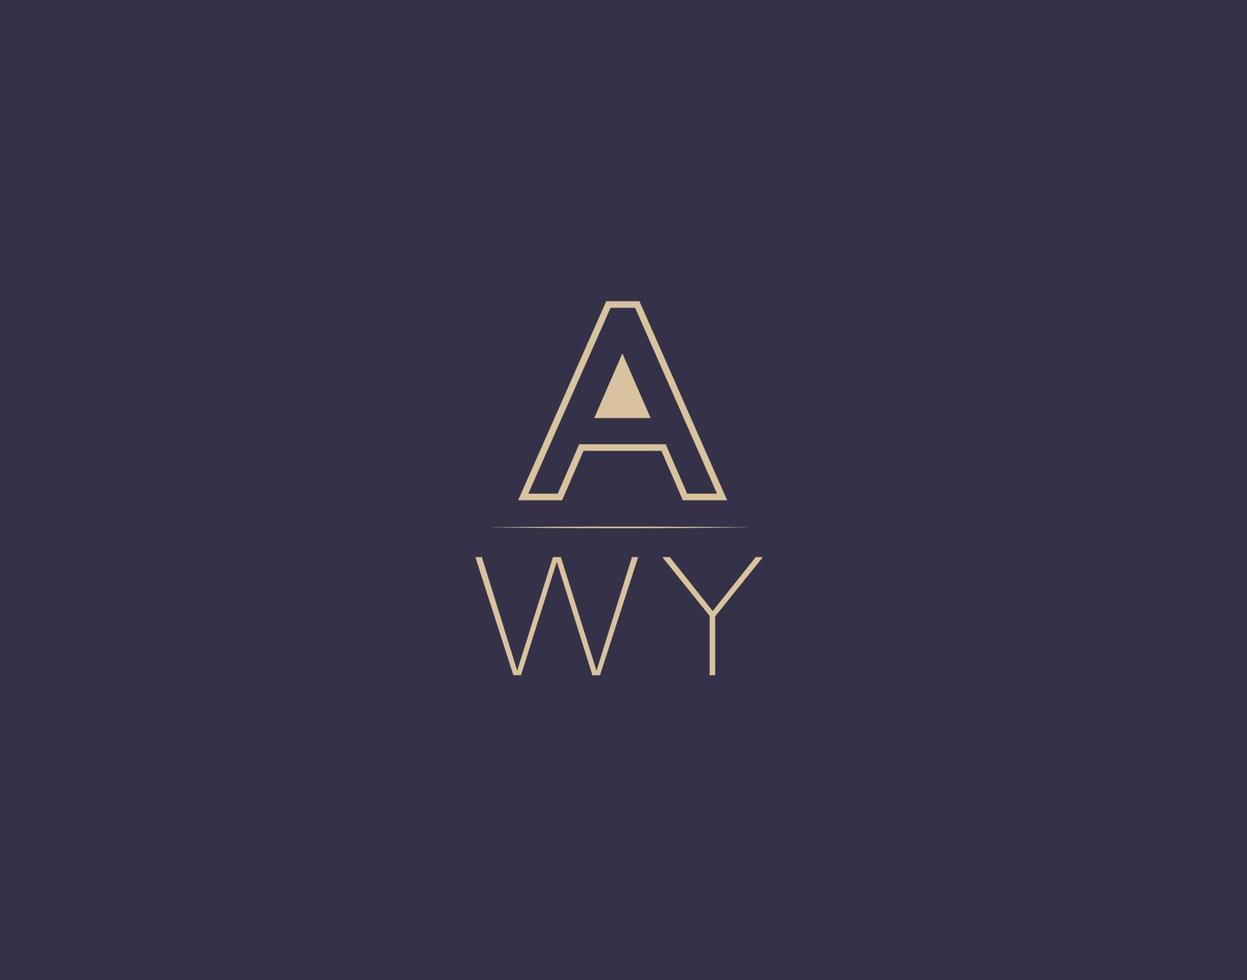 Awy Letter Logo Design moderne minimalistische Vektorbilder vektor